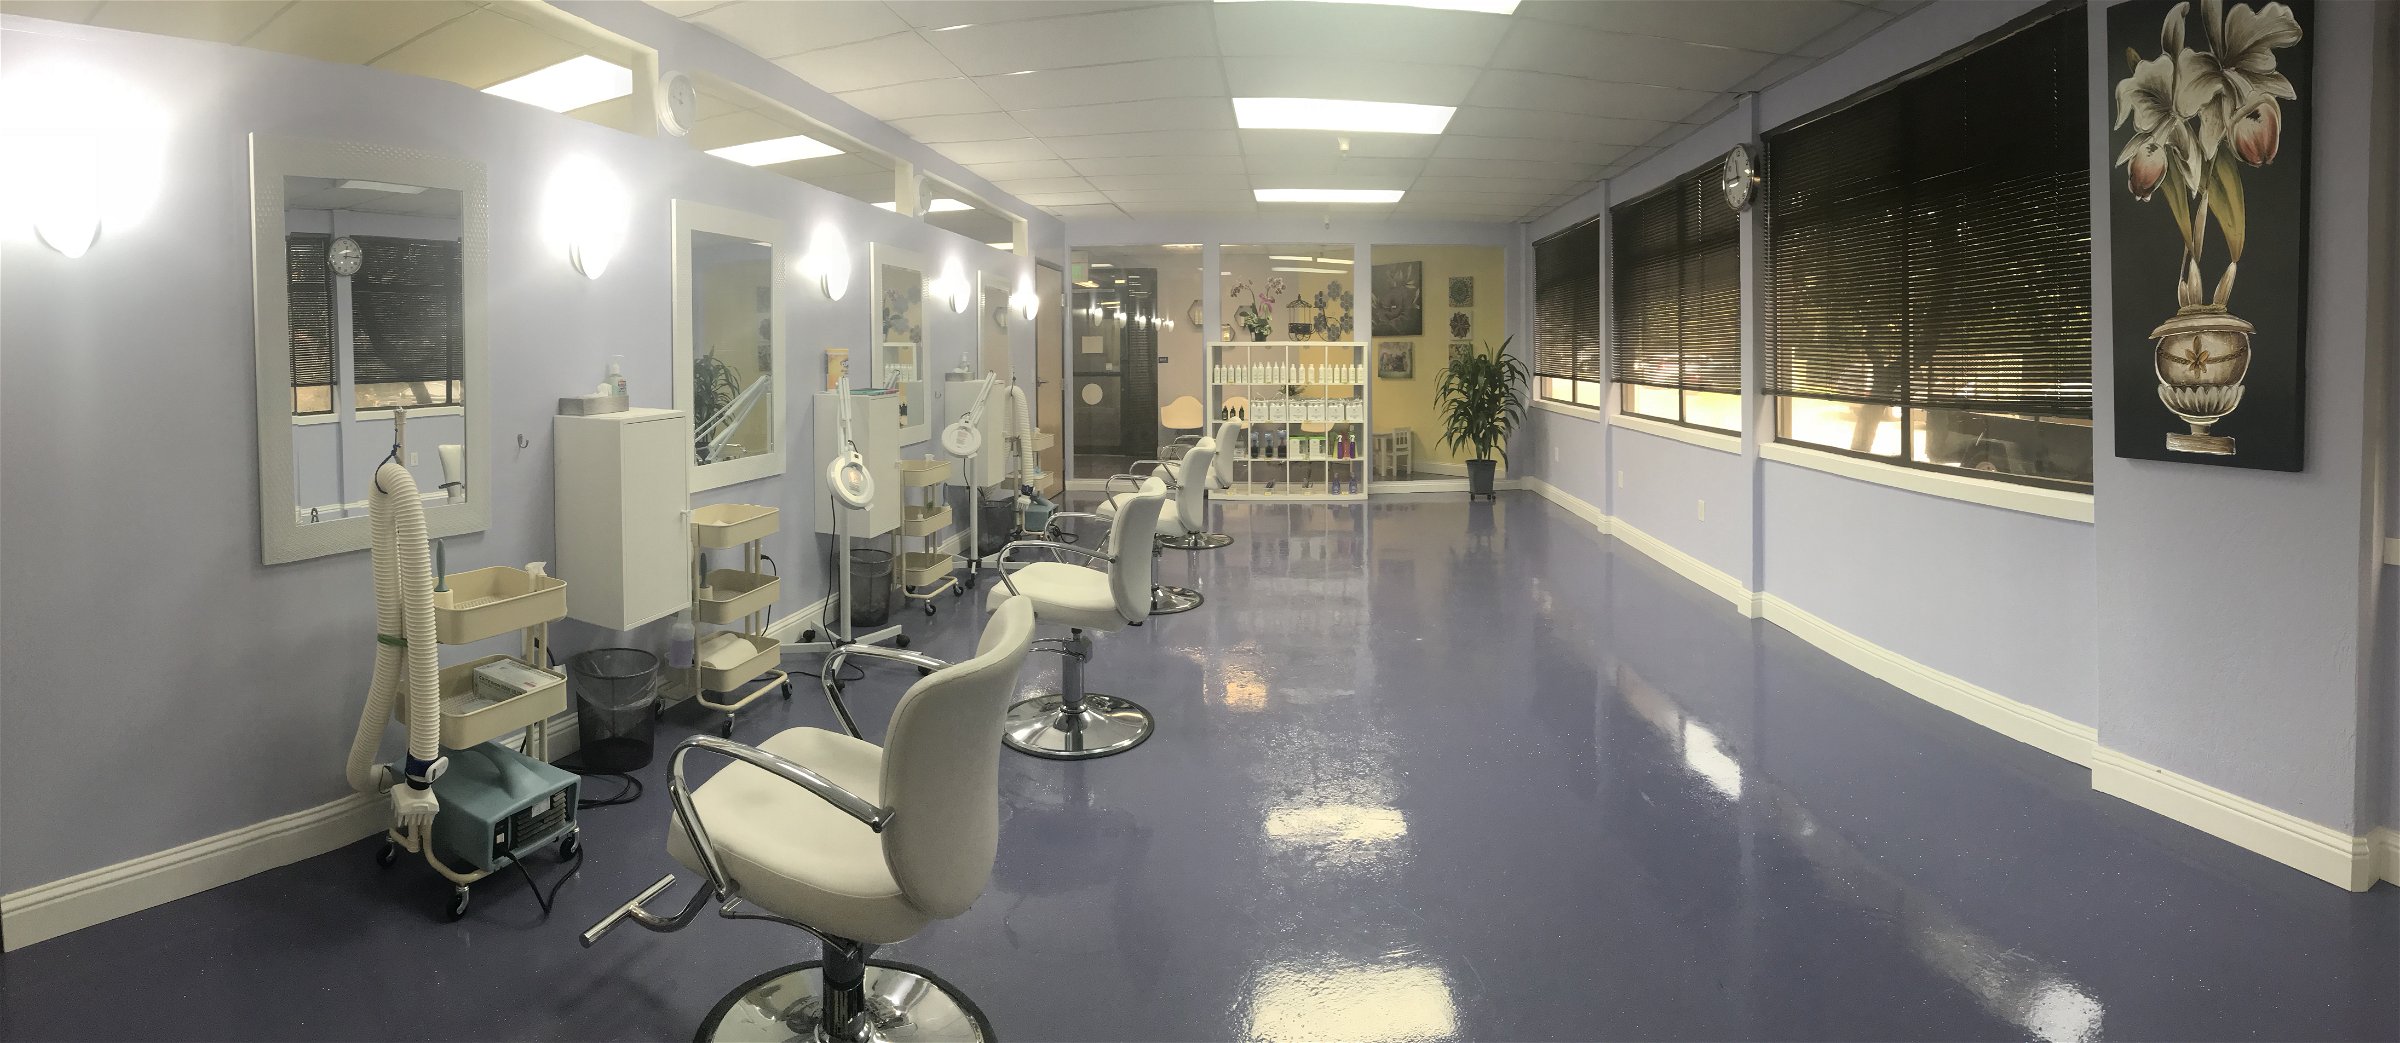 Lice Treatment Room